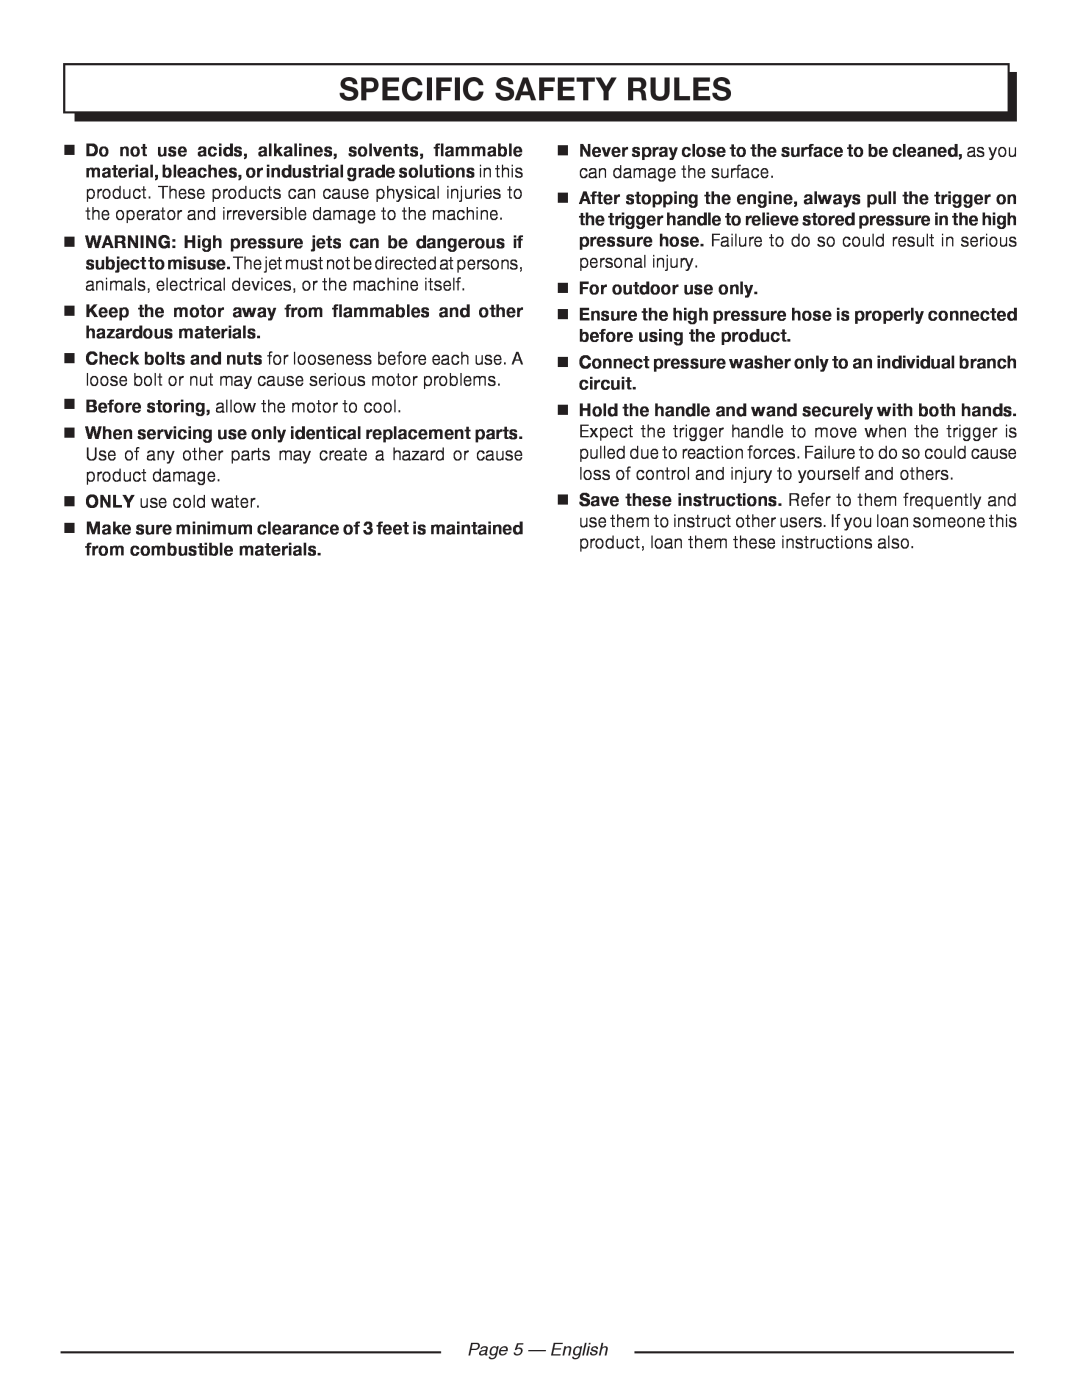 Homelite UT80720 manuel dutilisation Page 5 - English, Specific Safety Rules 